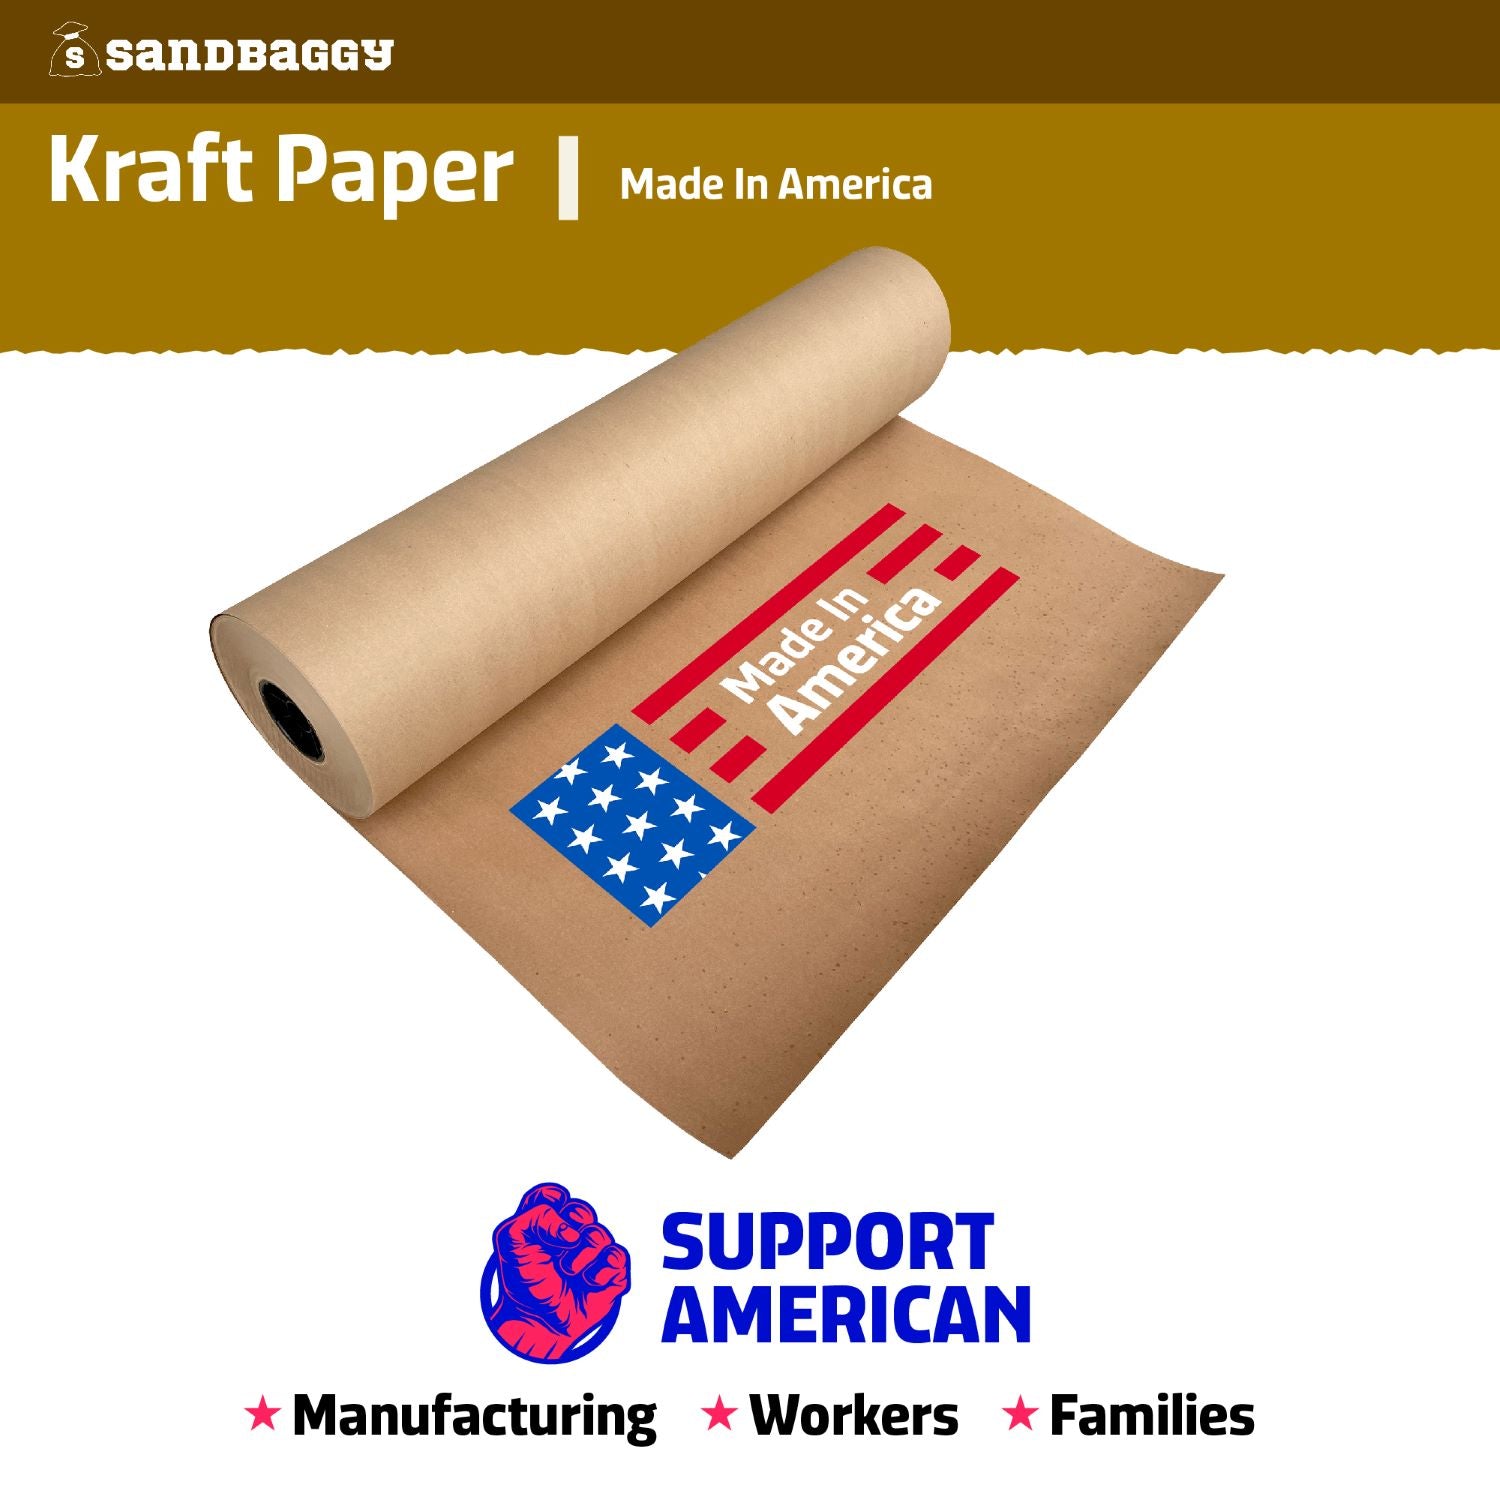 Heavy Duty Kraft Paper Rolls - 75 lb. Recycled Paper (Brown